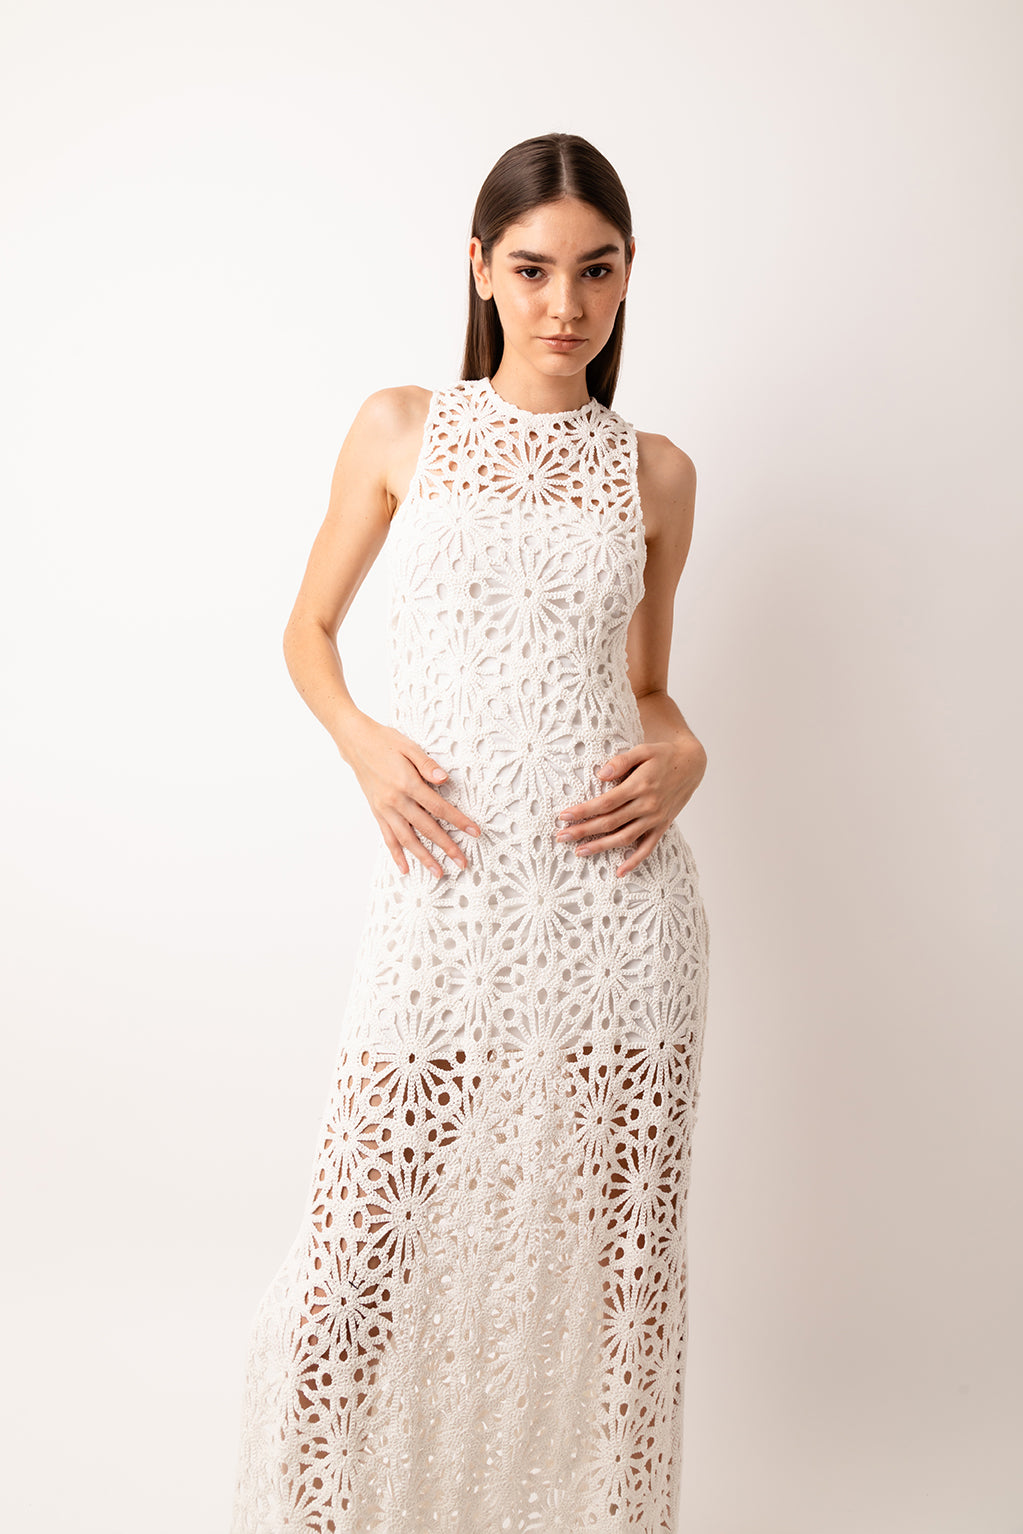 Sorrento White Crochet Lace Maxi Dress